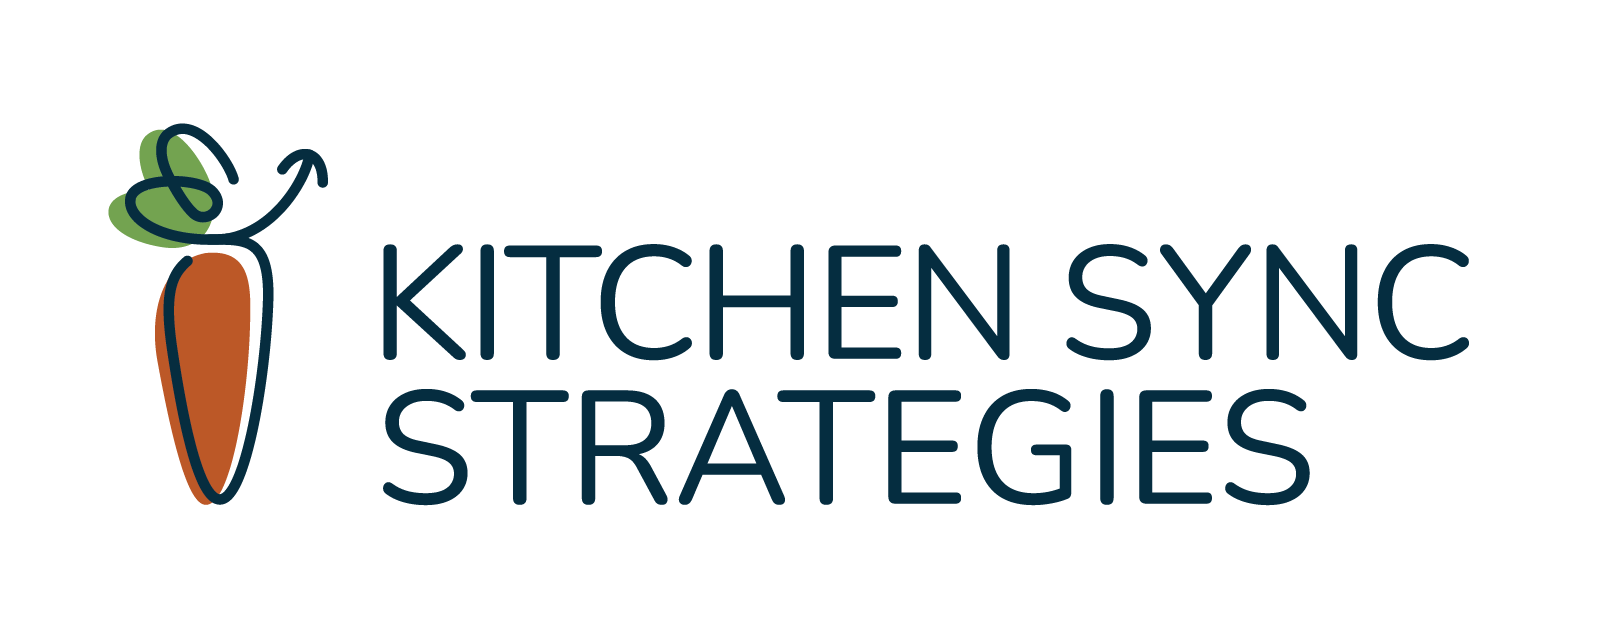 Kitchen Sync Strategies